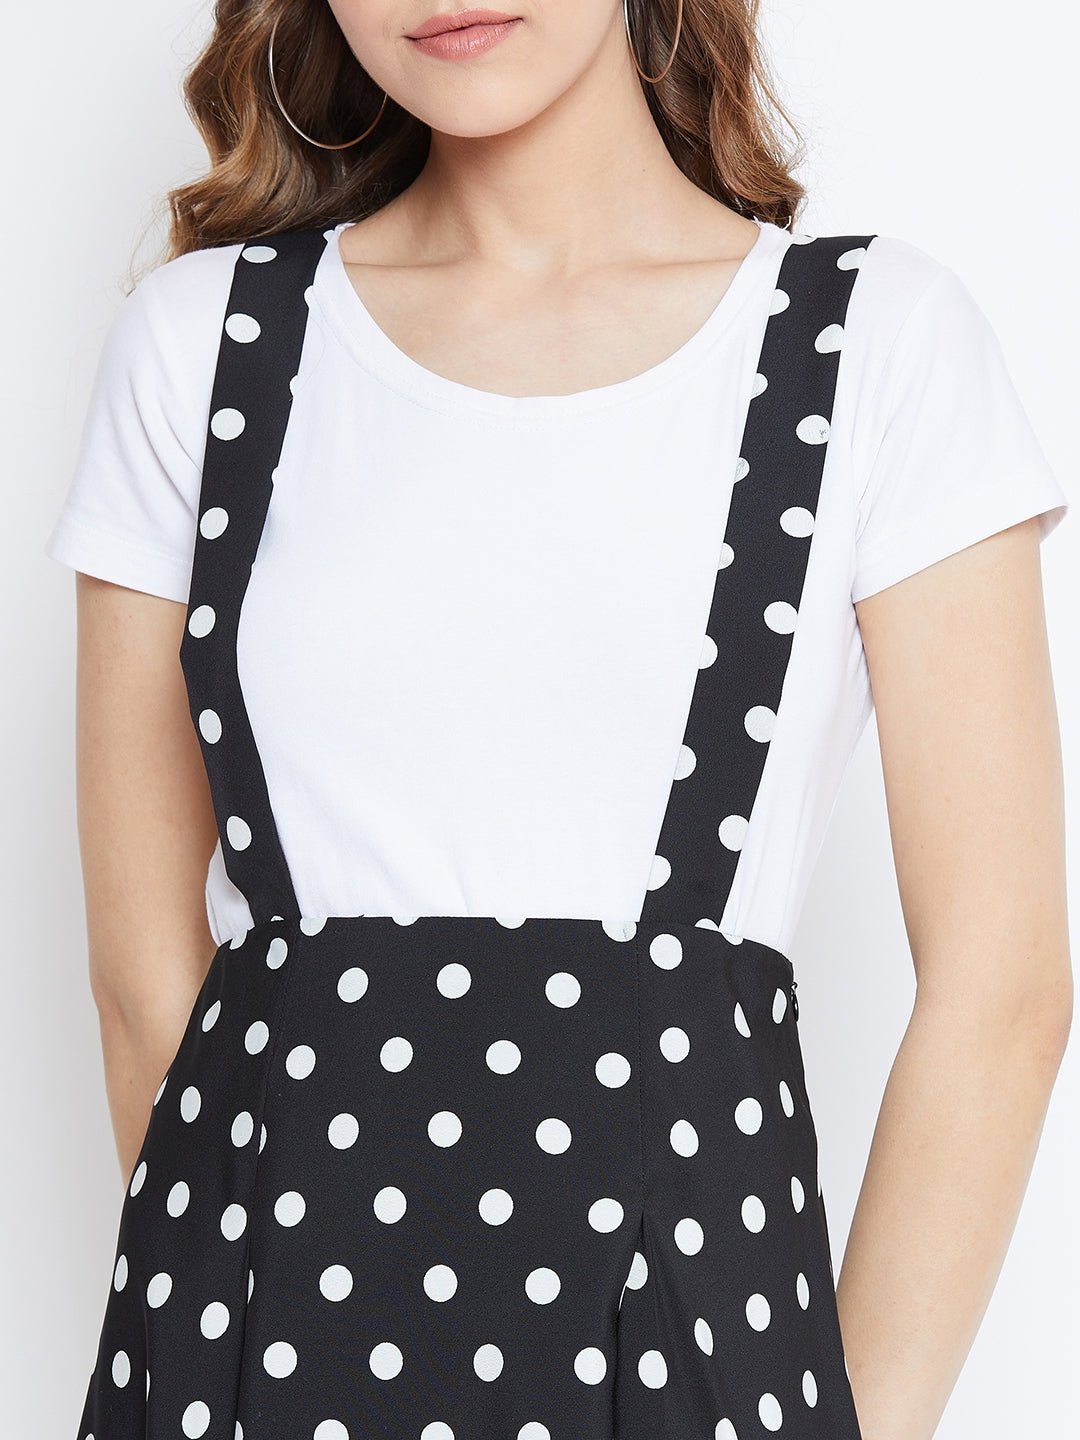 Folk Republic Women Black & White Polka Dot Printed Mid-Rise Flared Mini Skirt With Shoulder Straps - #folk republic#